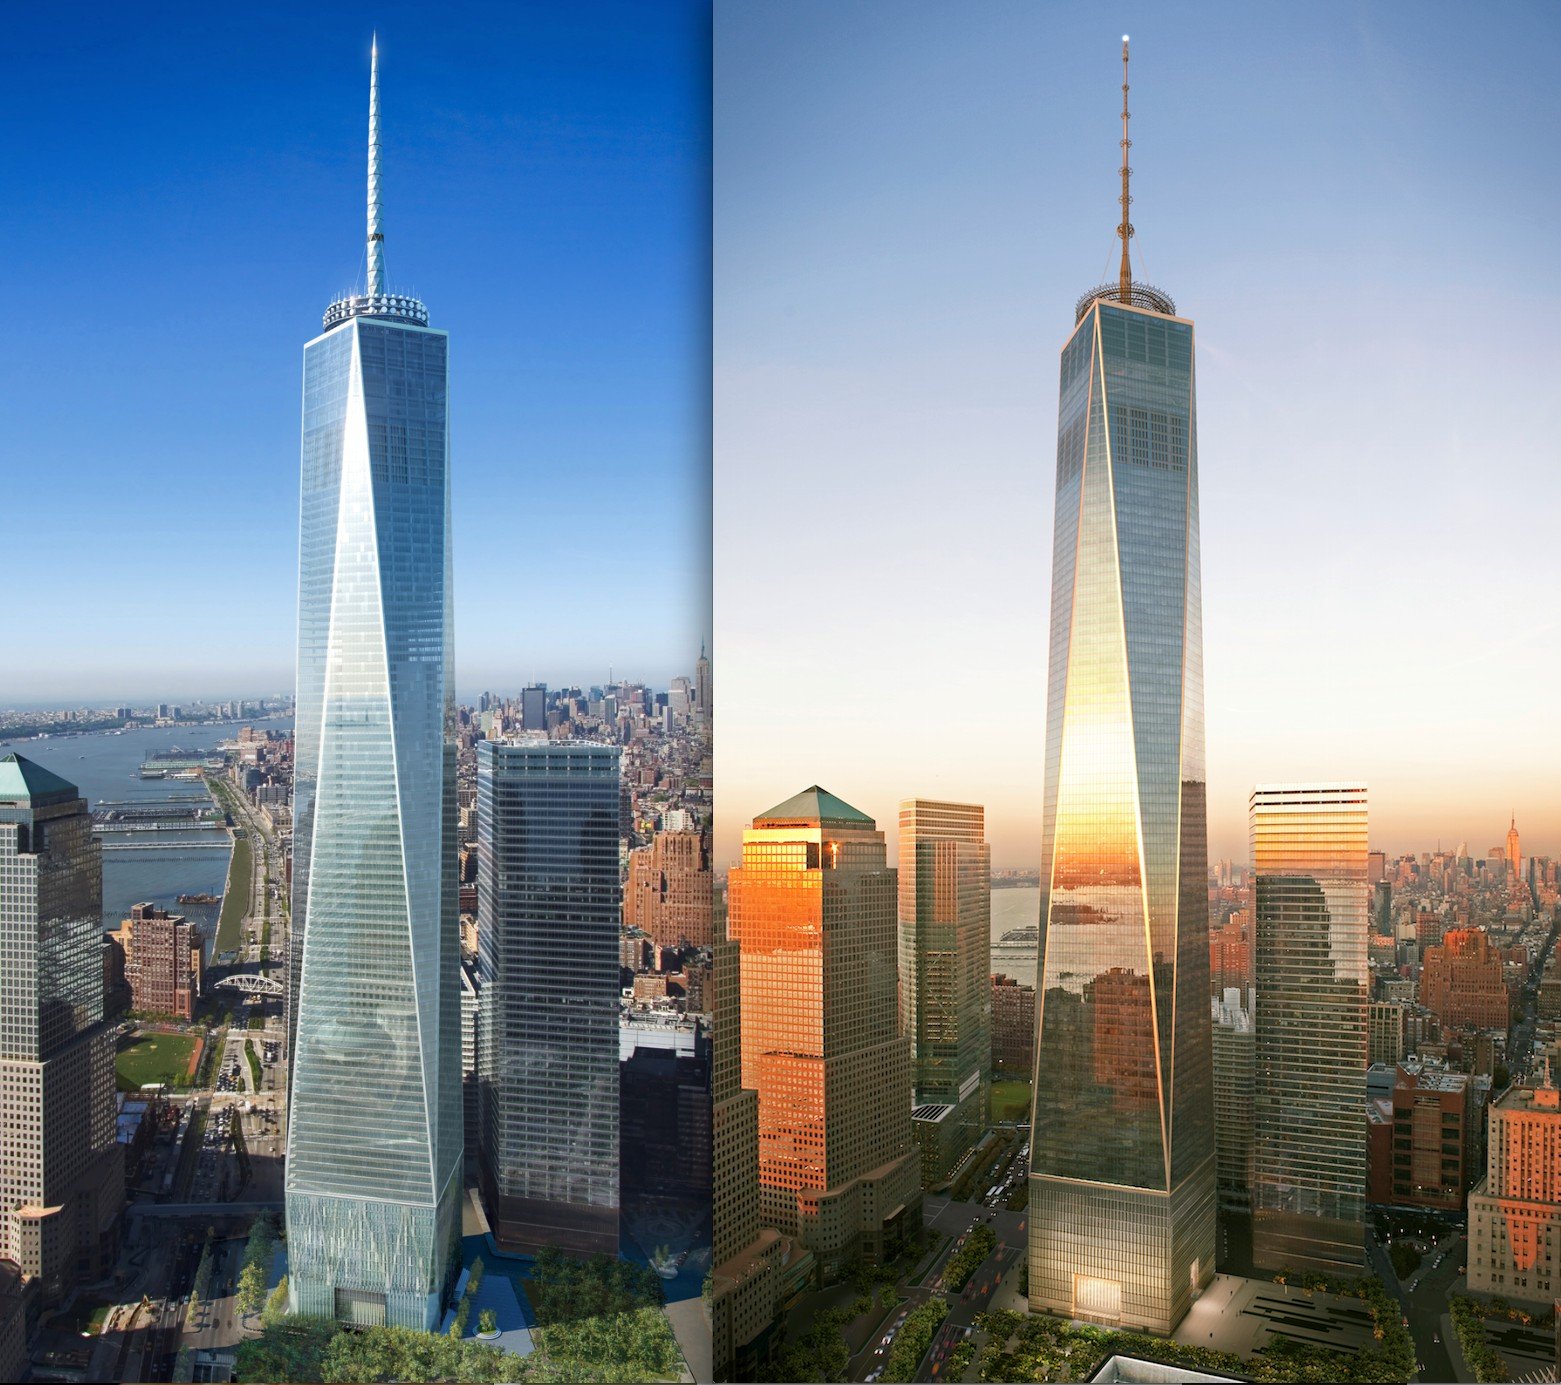 One world new york. ВТЦ 1 башня свободы. ВТЦ 1 Нью-Йорк. Всемирный торговый центр 1 Нью-Йорк. ВТЦ 2 Нью-Йорк.